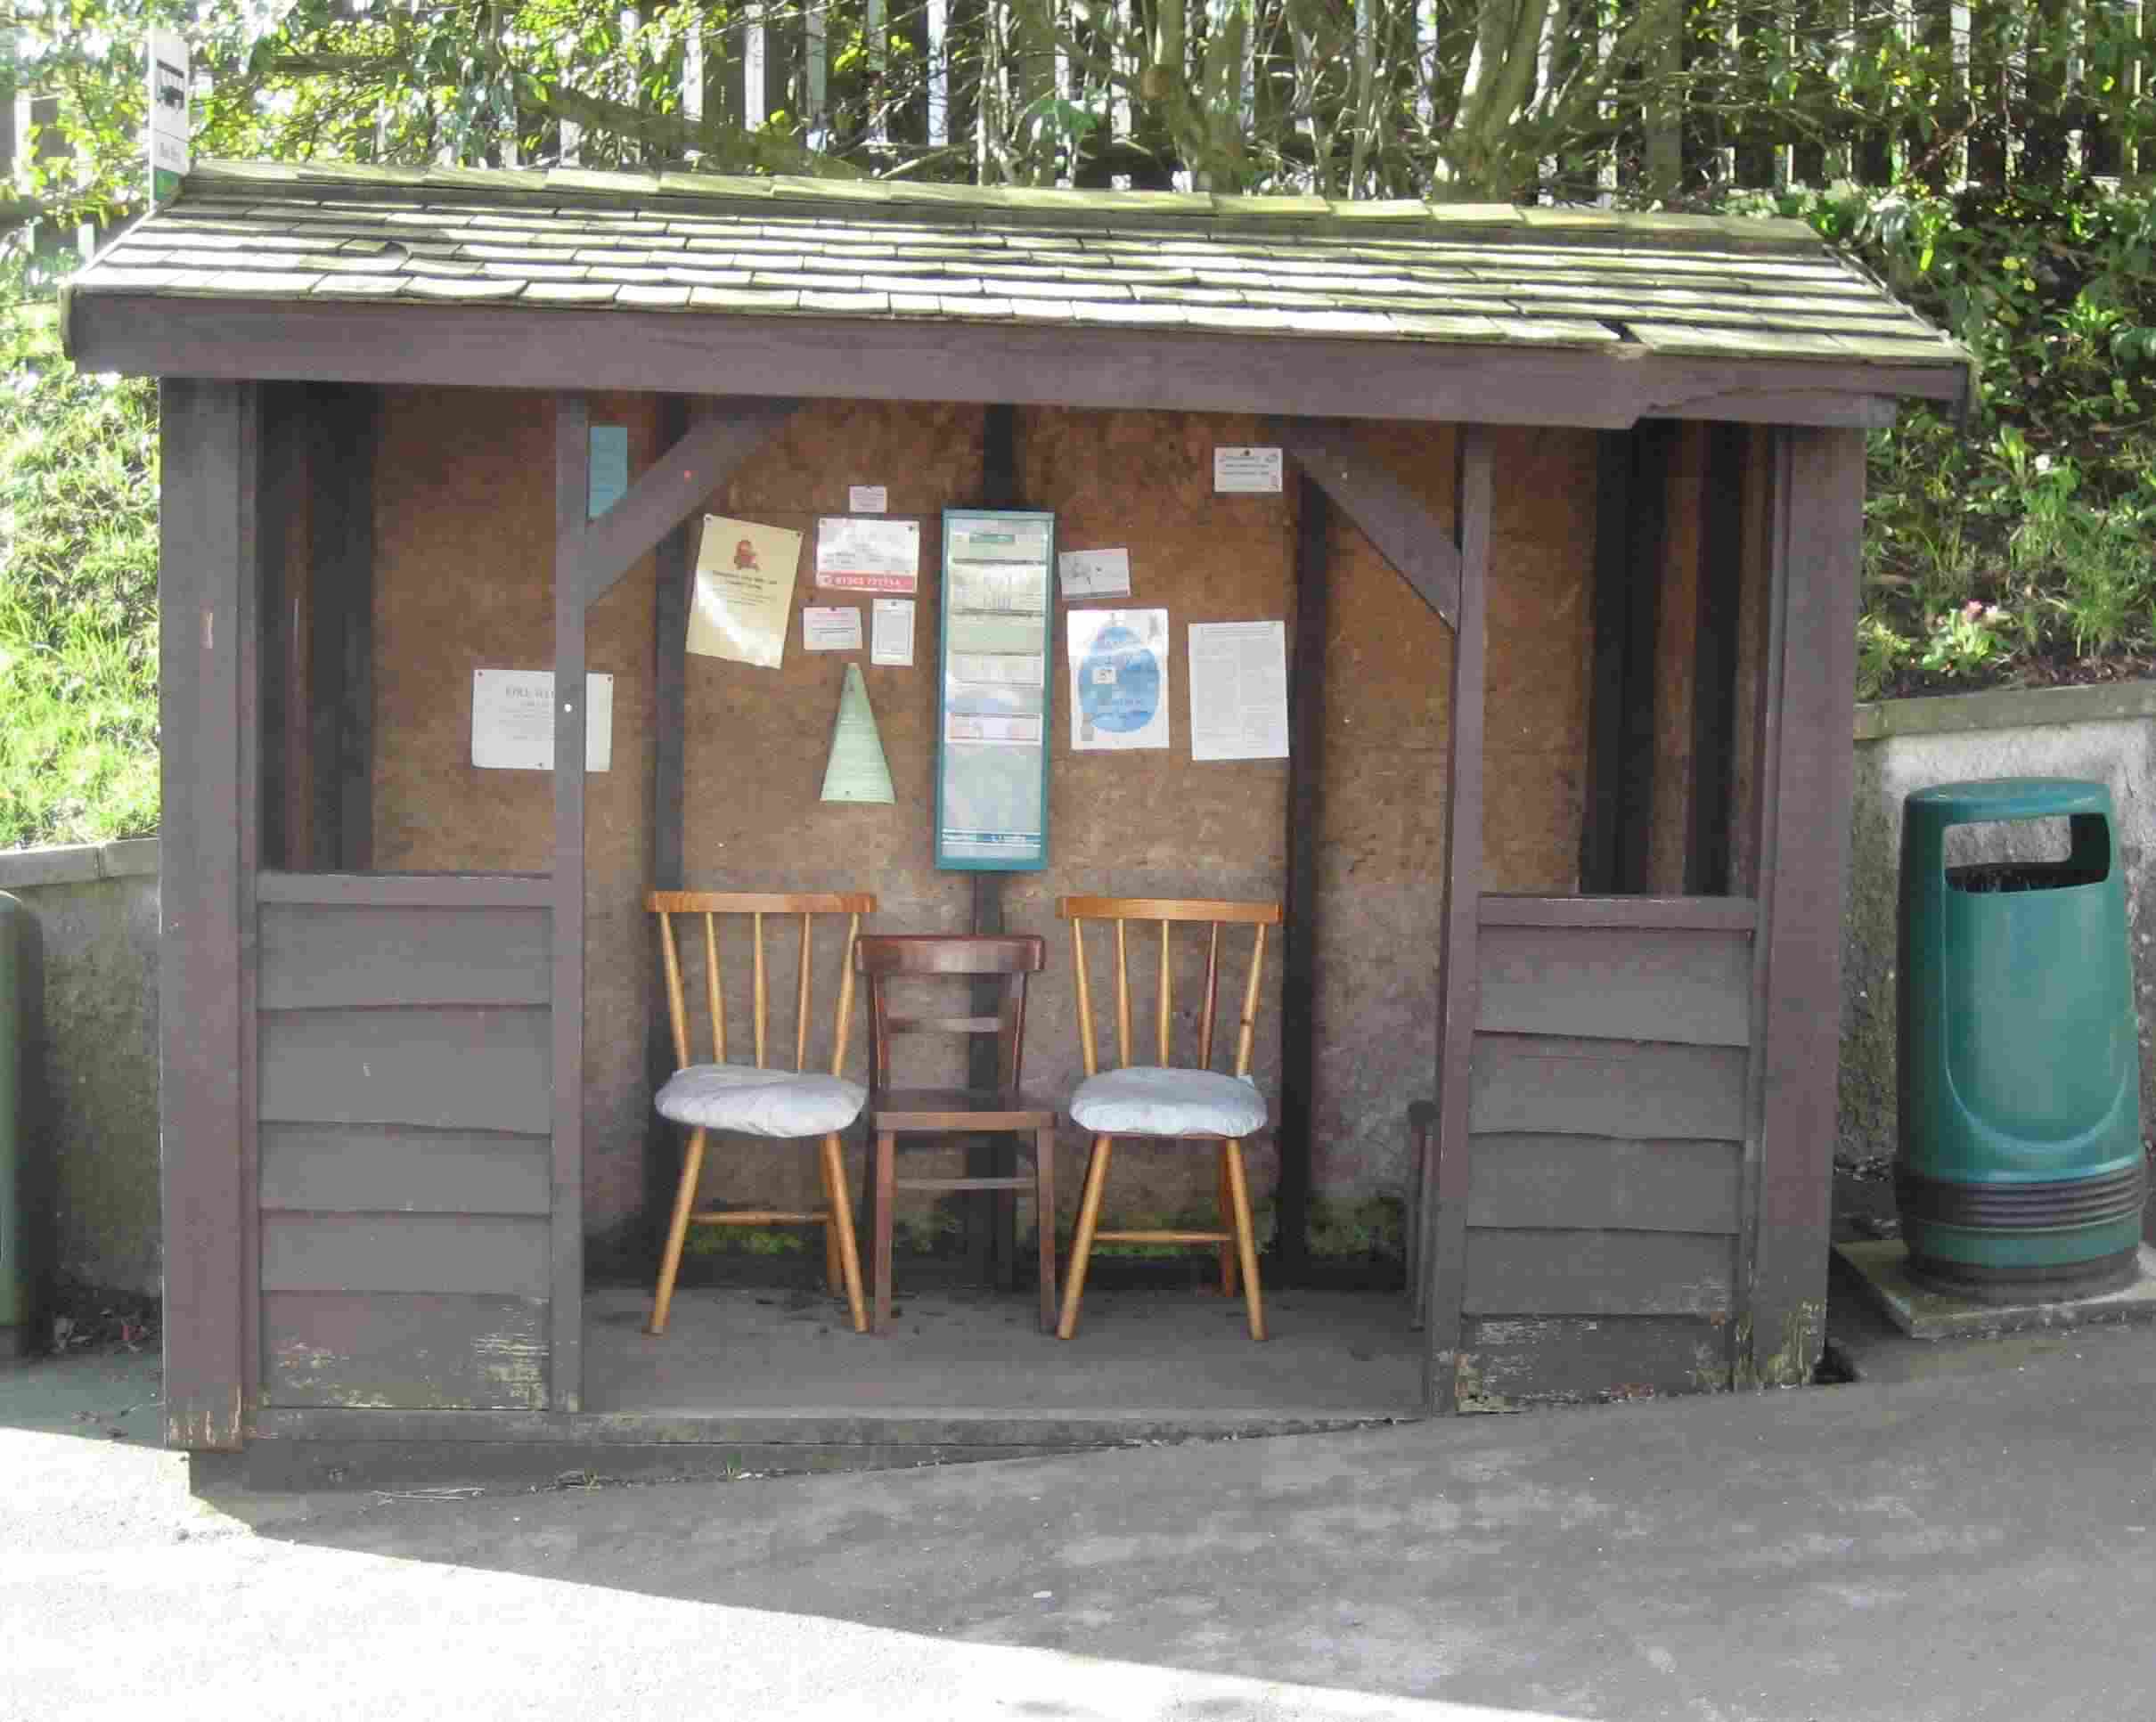 DN10 Bus shelter in Shobrook